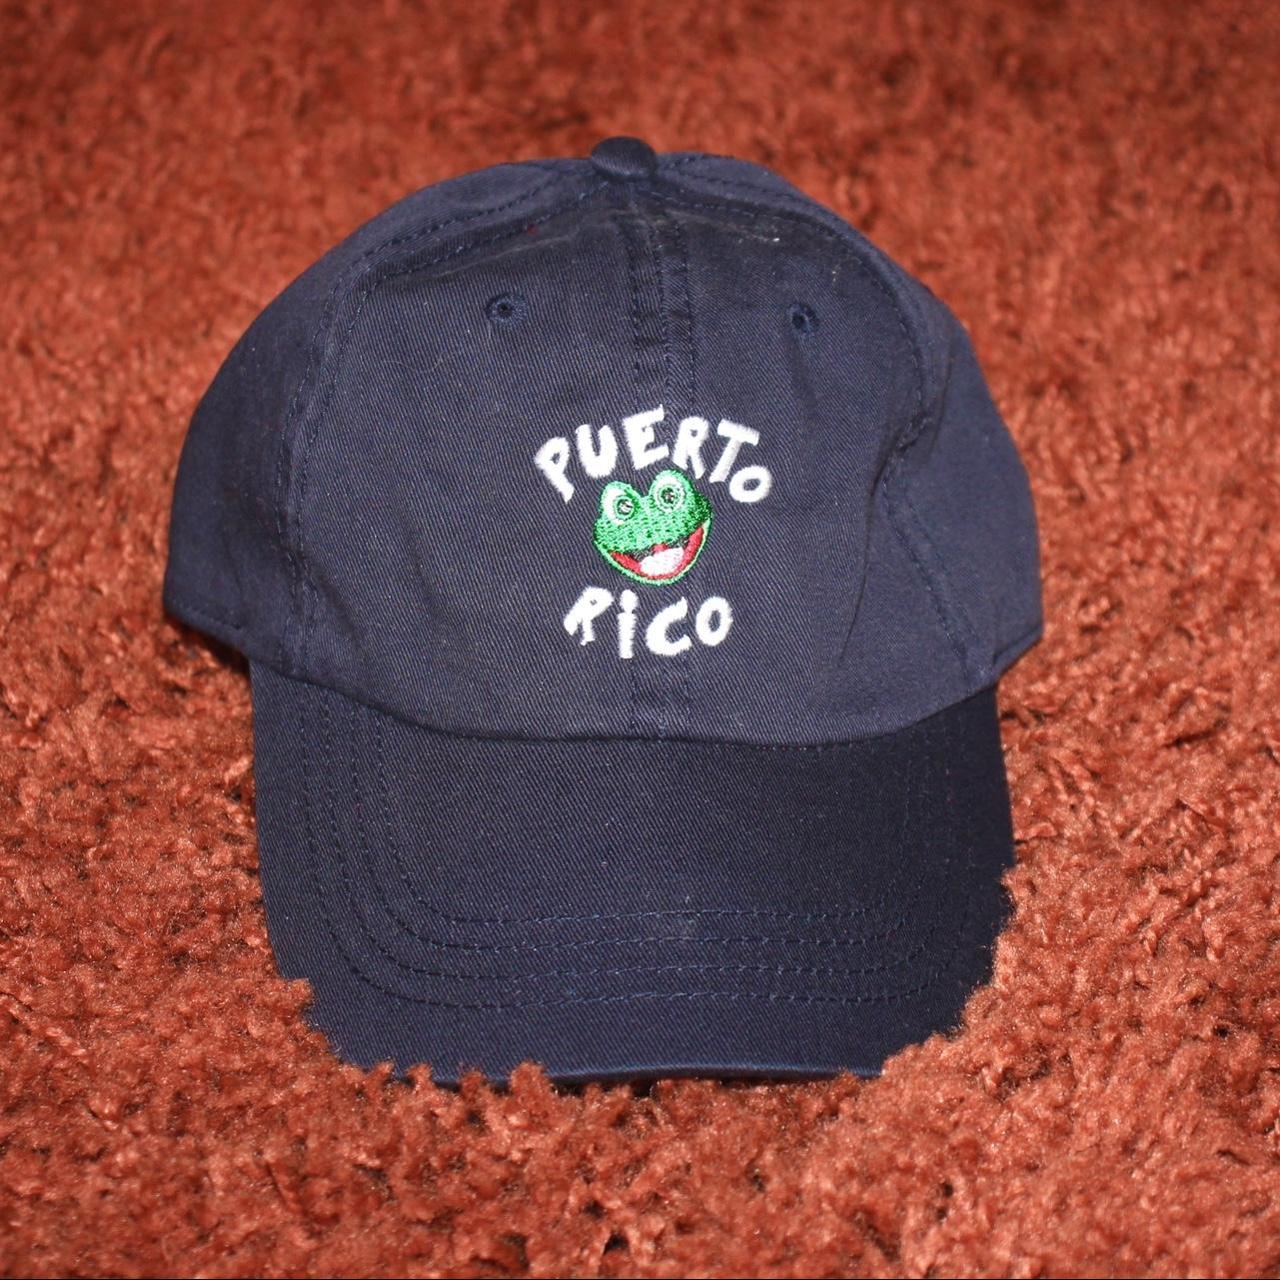 Puerto Rico Snapback Hats Vintage Hats (Snapback